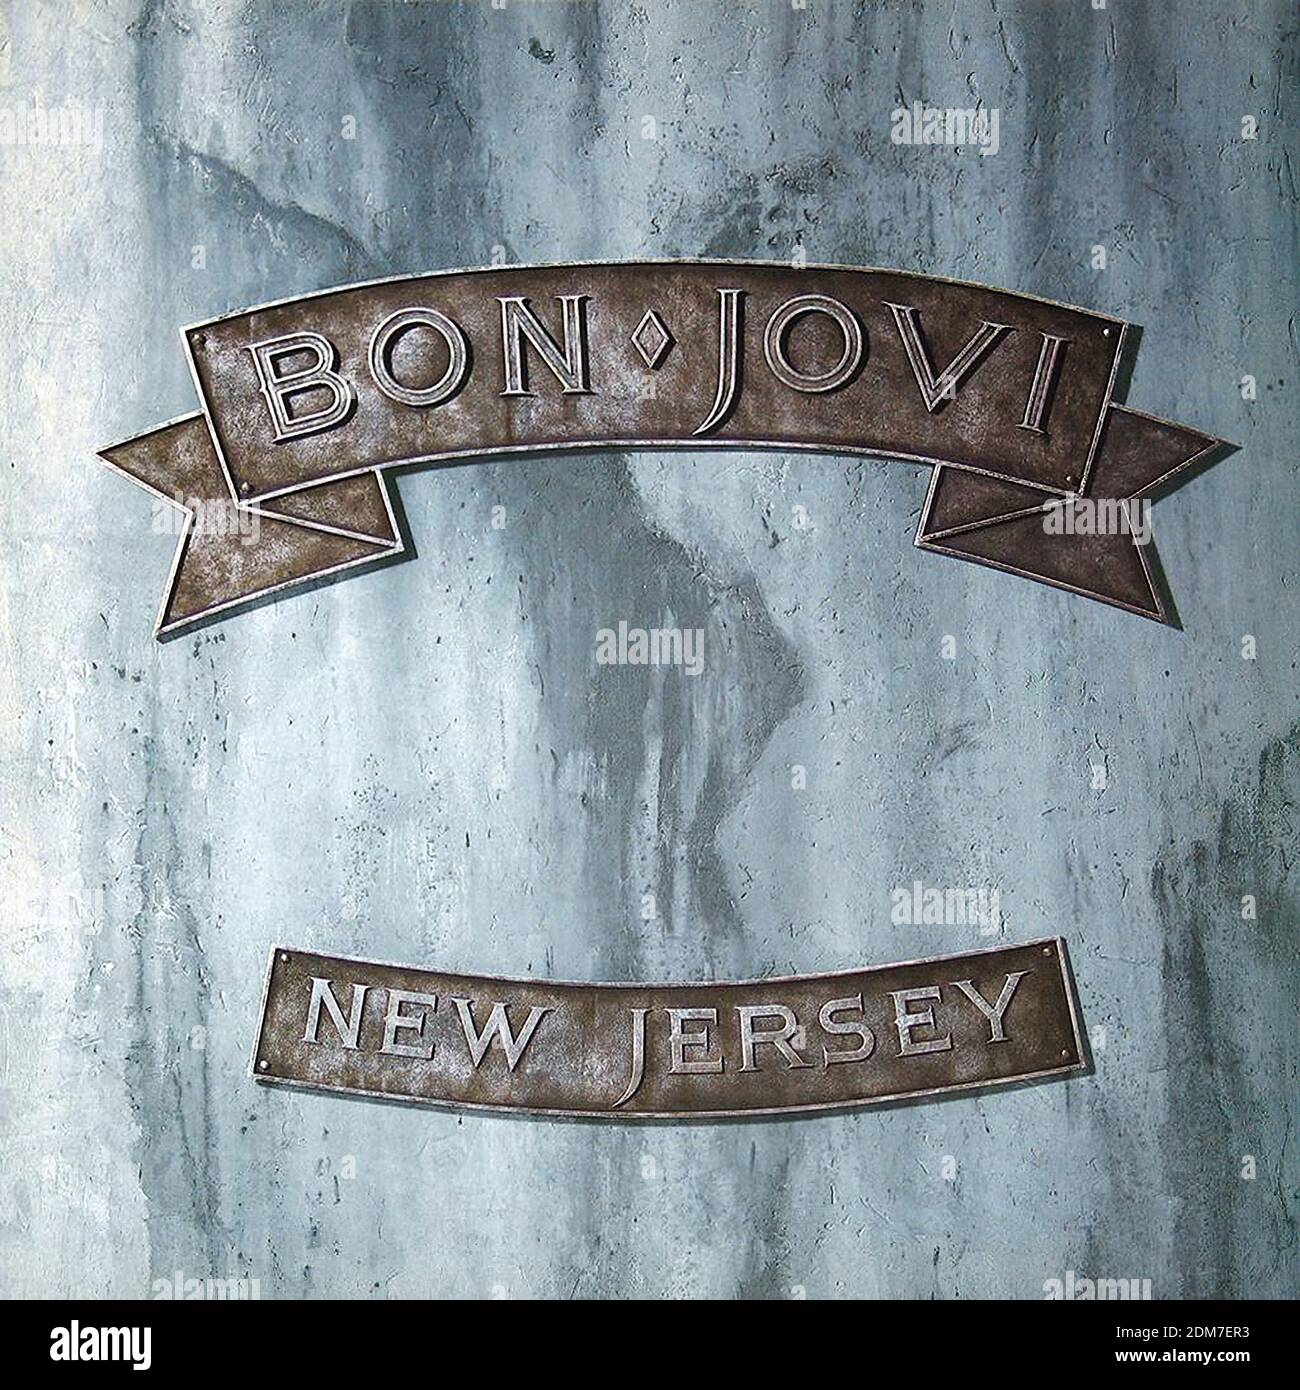 BON JOVI NEW JERSEY - Vintage Vinyl Record Cover Stock Photo - Alamy